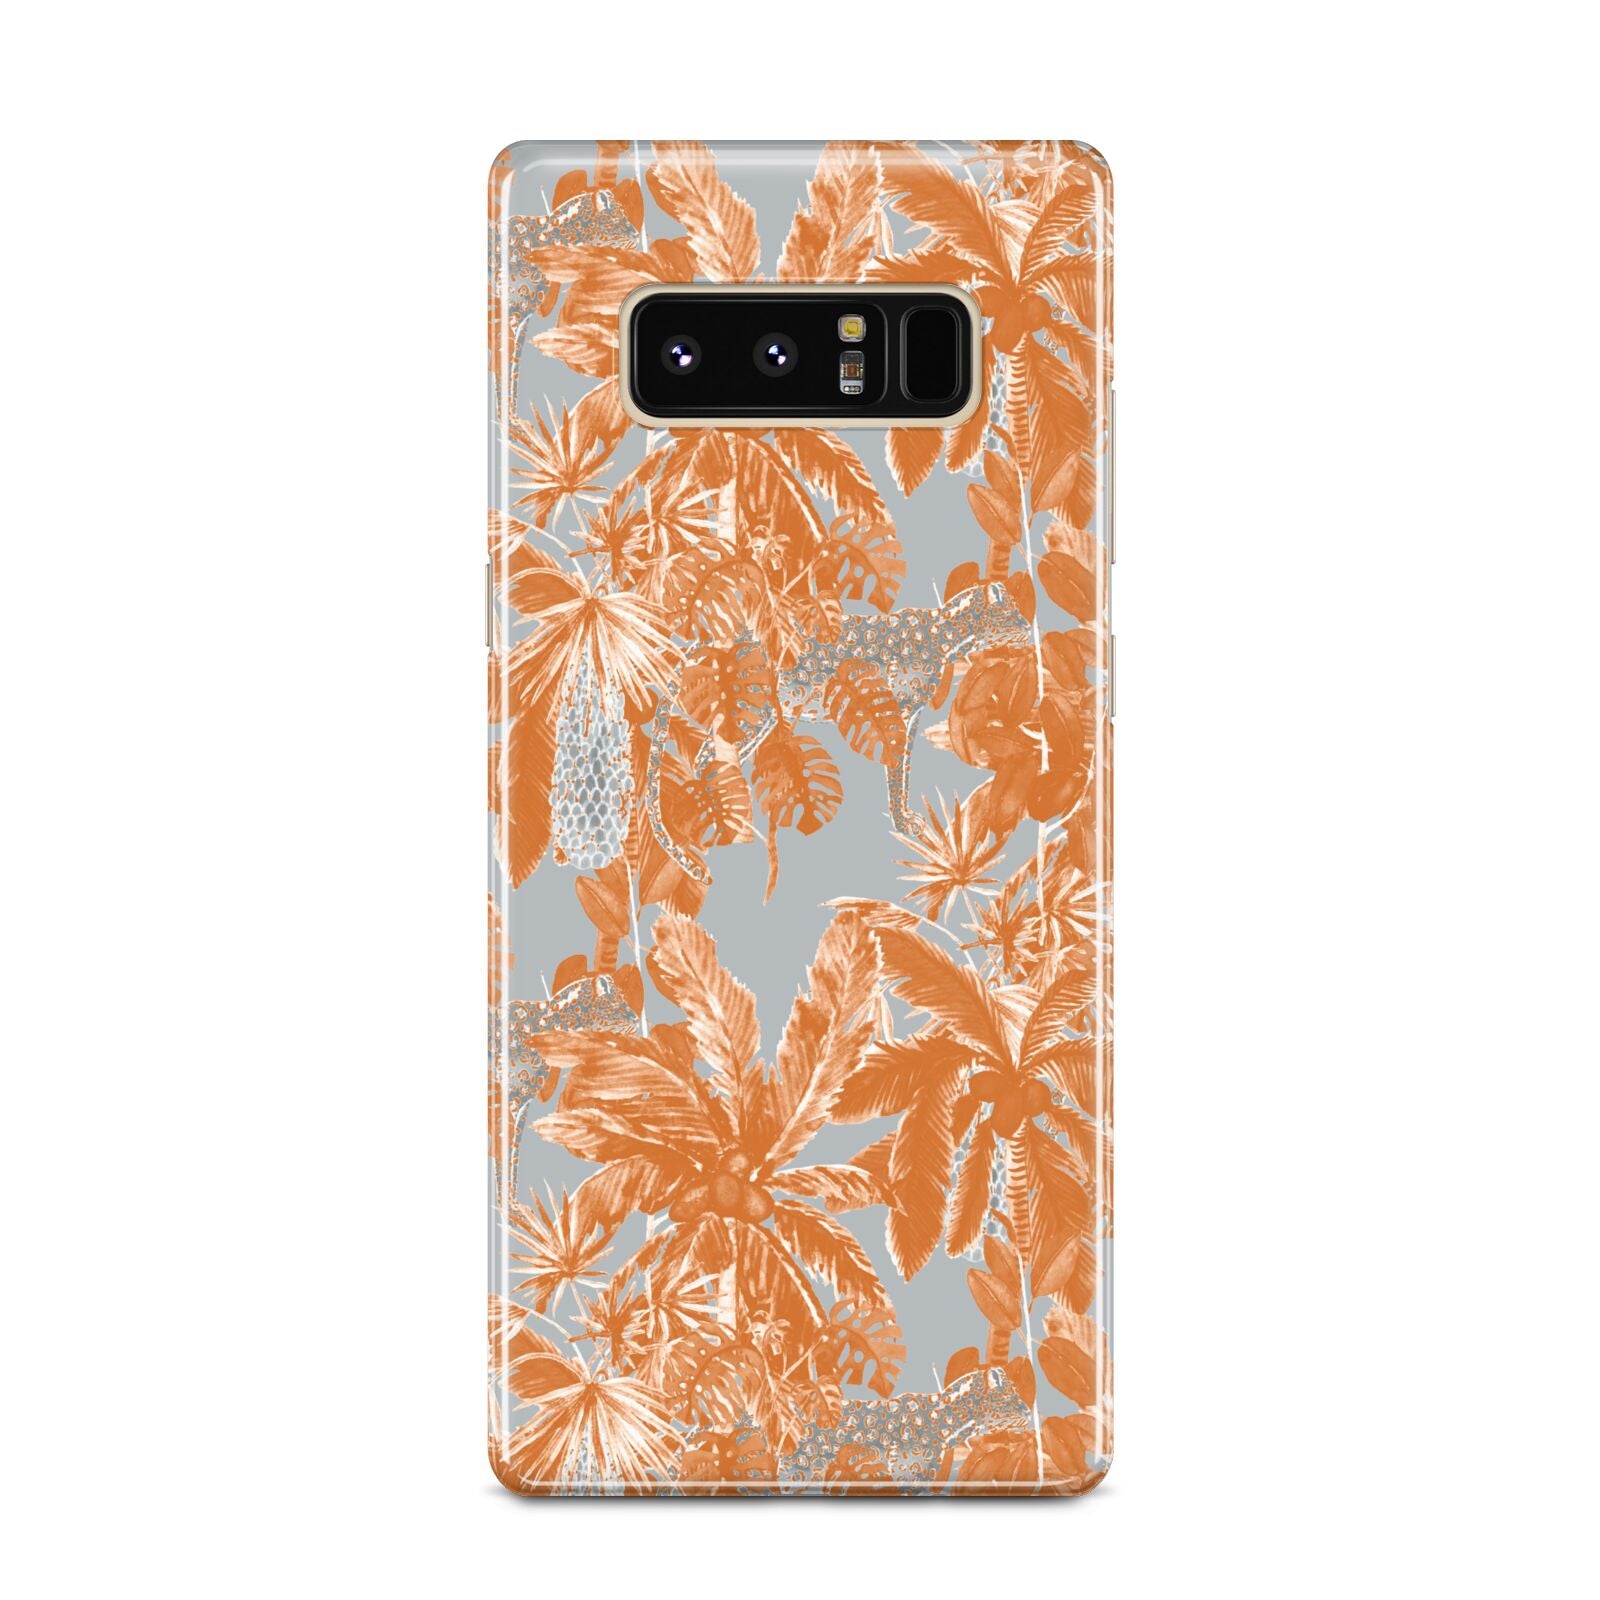 Tropical Samsung Galaxy Note 8 Case